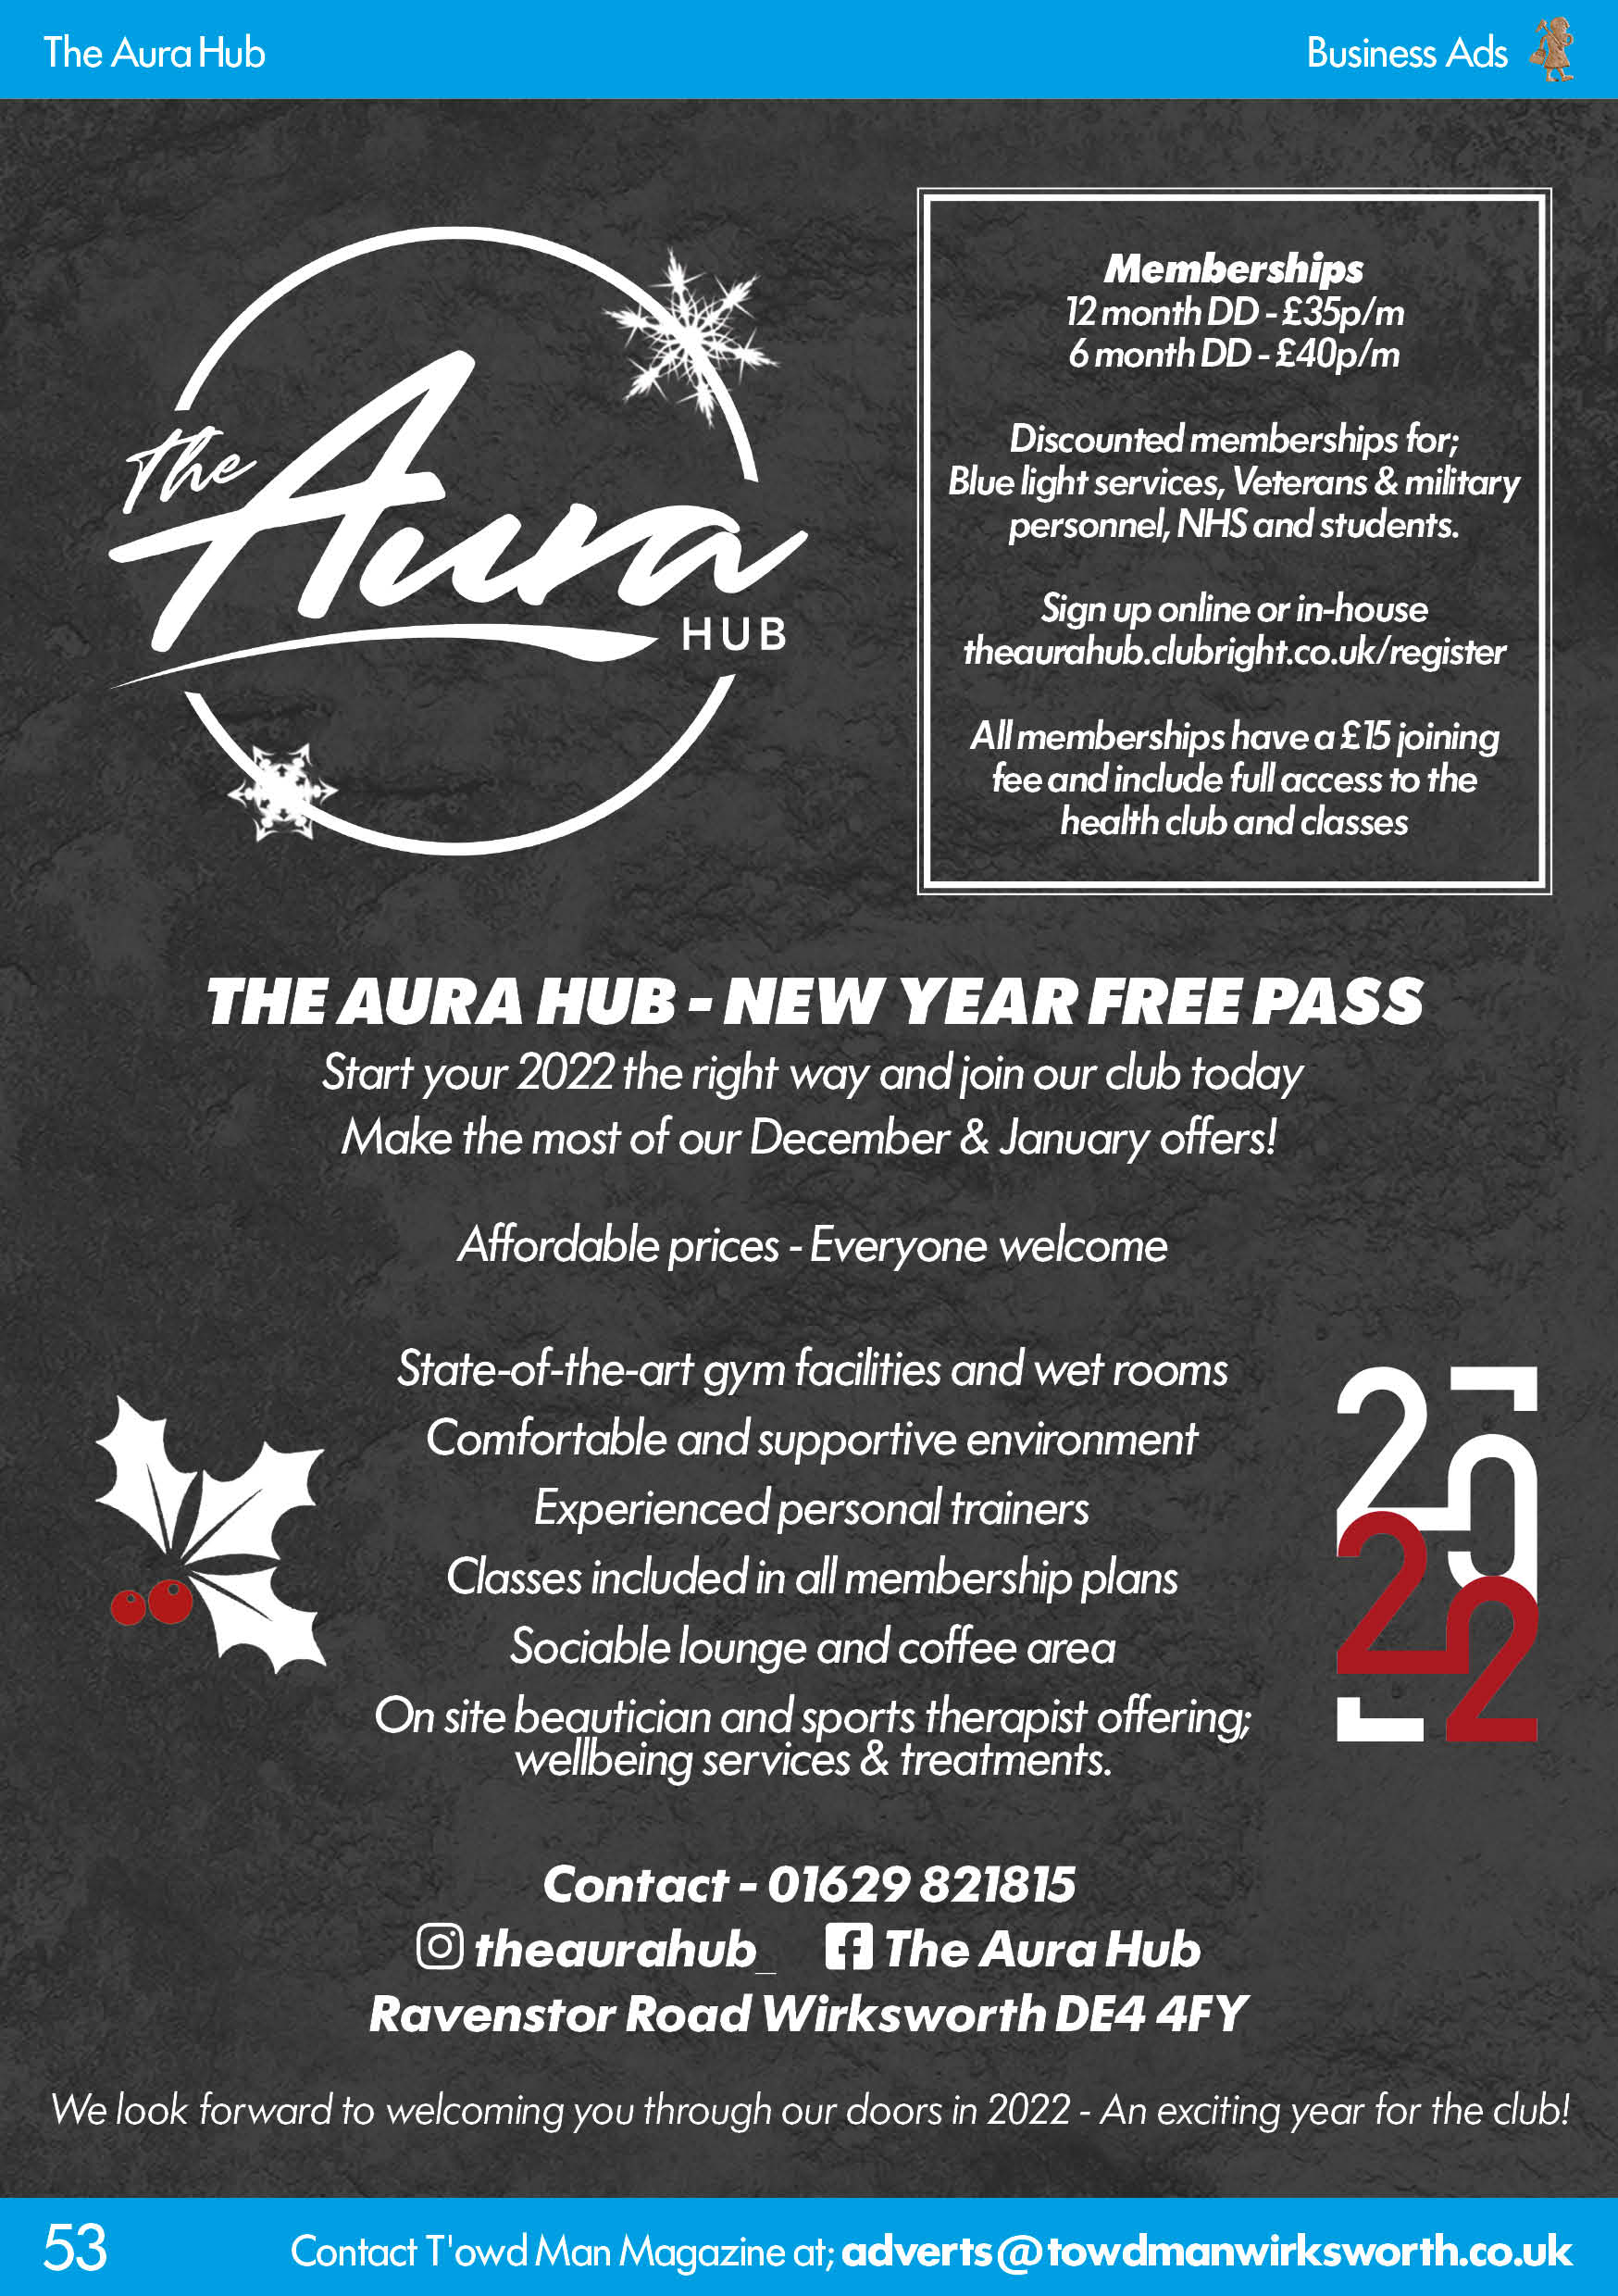 The Aura Hub